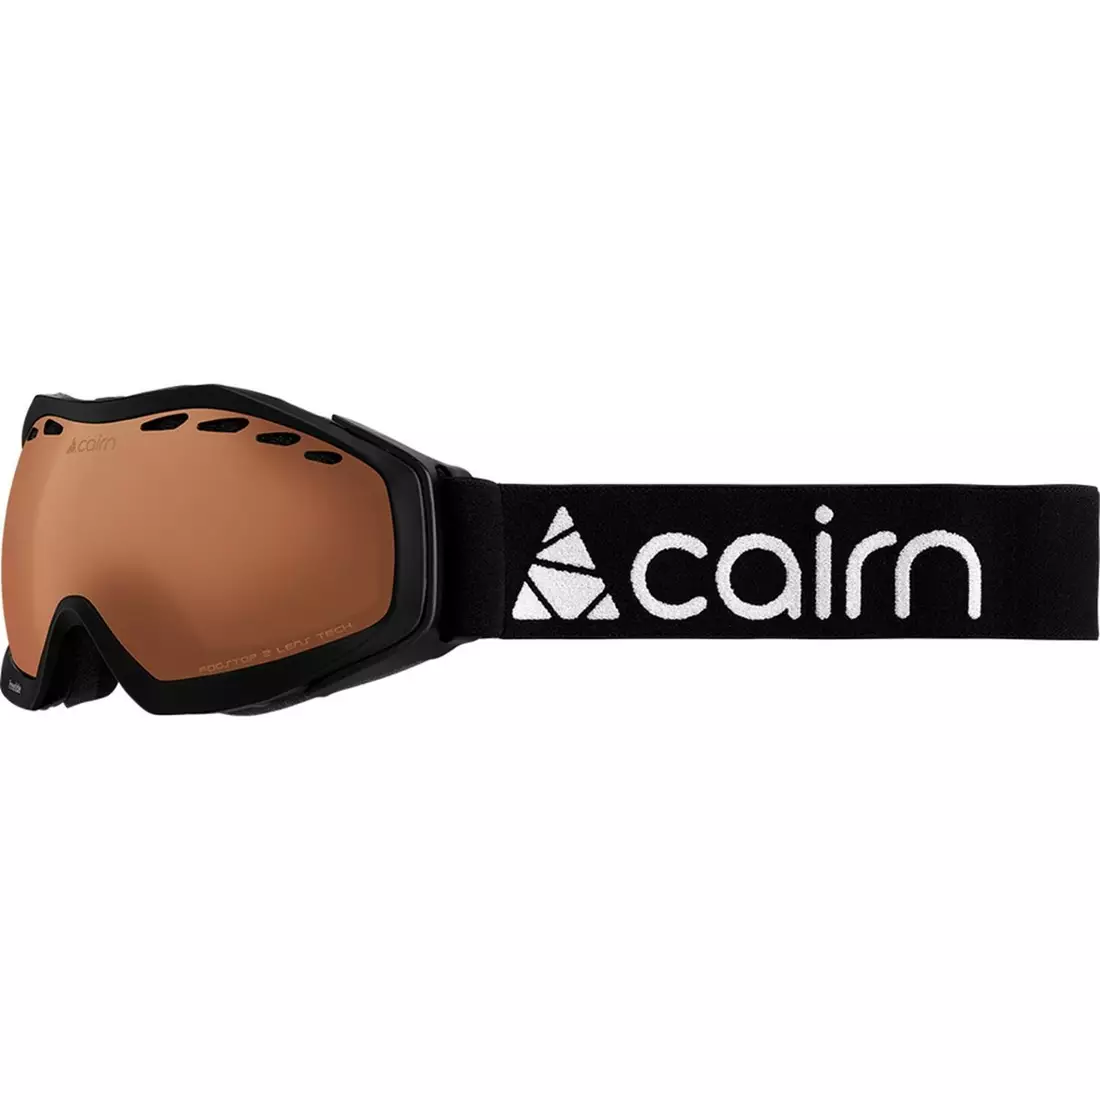 CAIRN lyžiarske/snowboardové okuliare FREERIDE 202 PHOTOCHROMIC, Black, 580068202